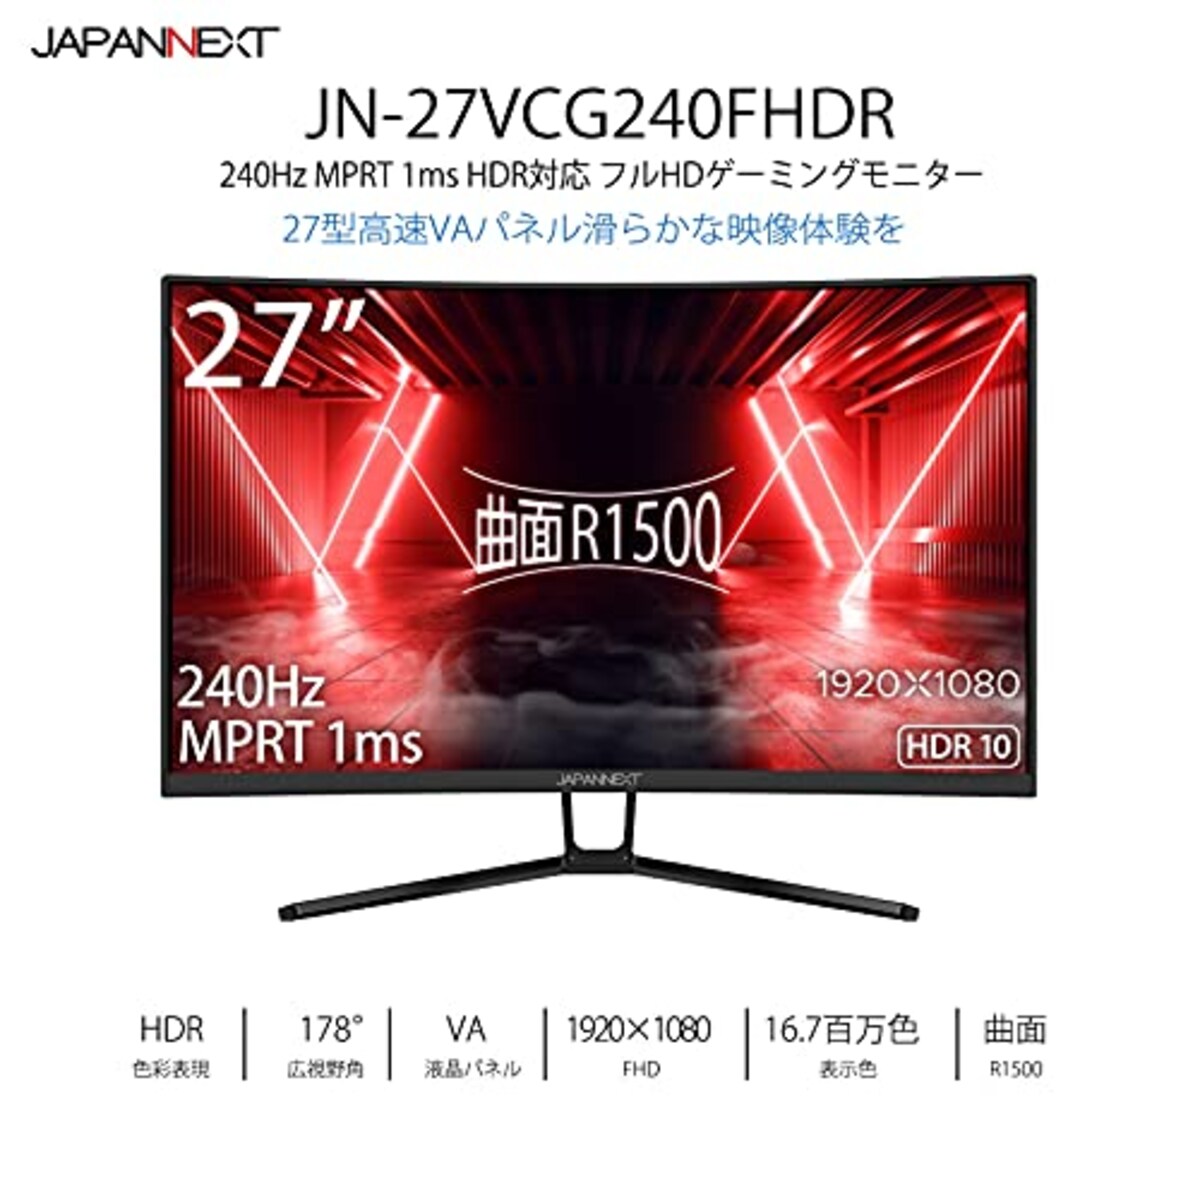  JAPANNEXT 27インチ 曲面 Full HD(1920 x 1080) 240Hz 液晶モニター JN-27VCG240FHDR画像2 